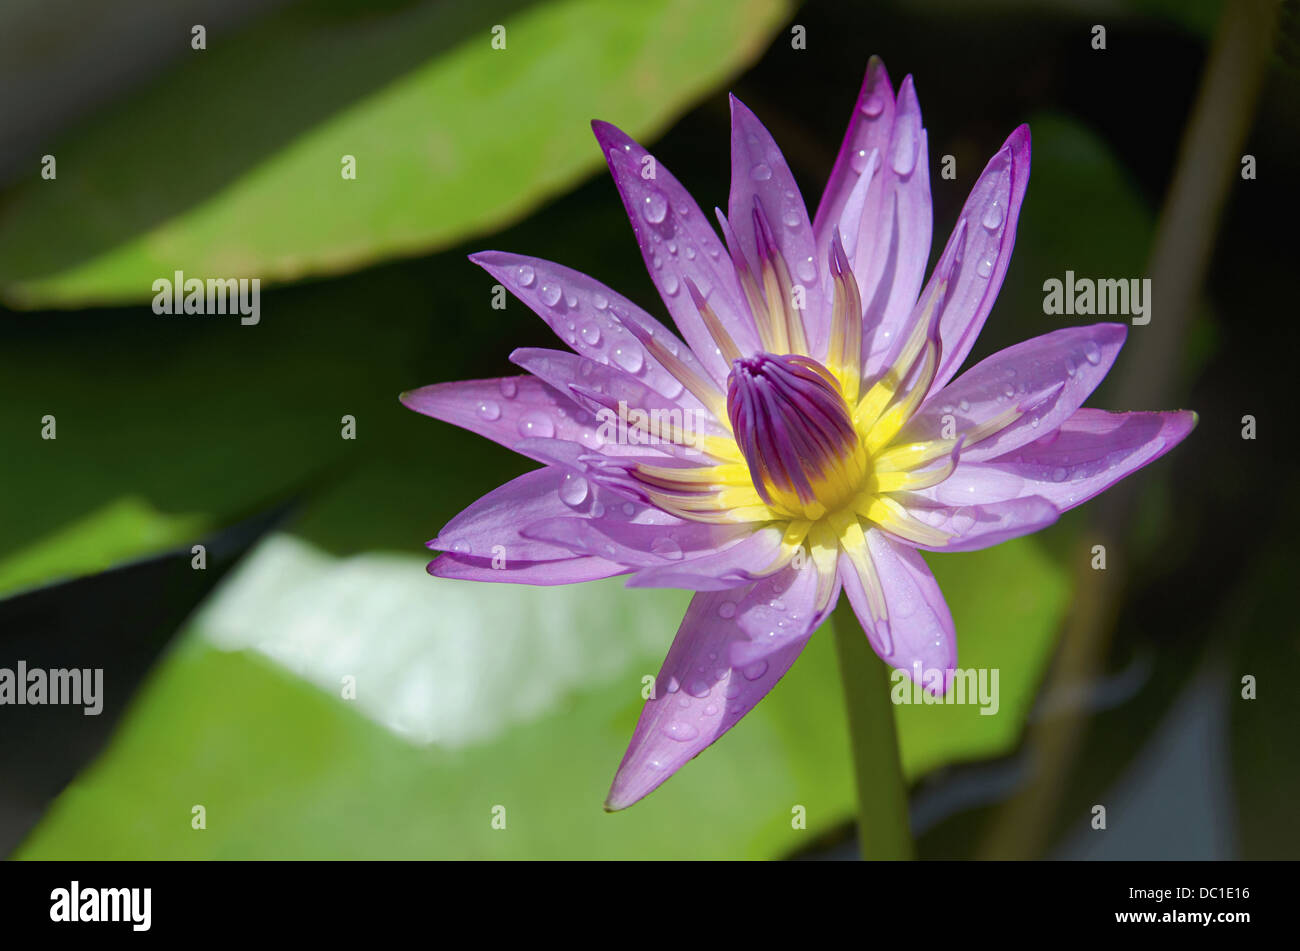 Lila Lotus schließen sich heilige Lotus Nelumbo Nucifera Familie: Nelumbonaceae. Lotus ist die nationale Blume von Indien Pune, Maharashtra, Indien Stockfoto